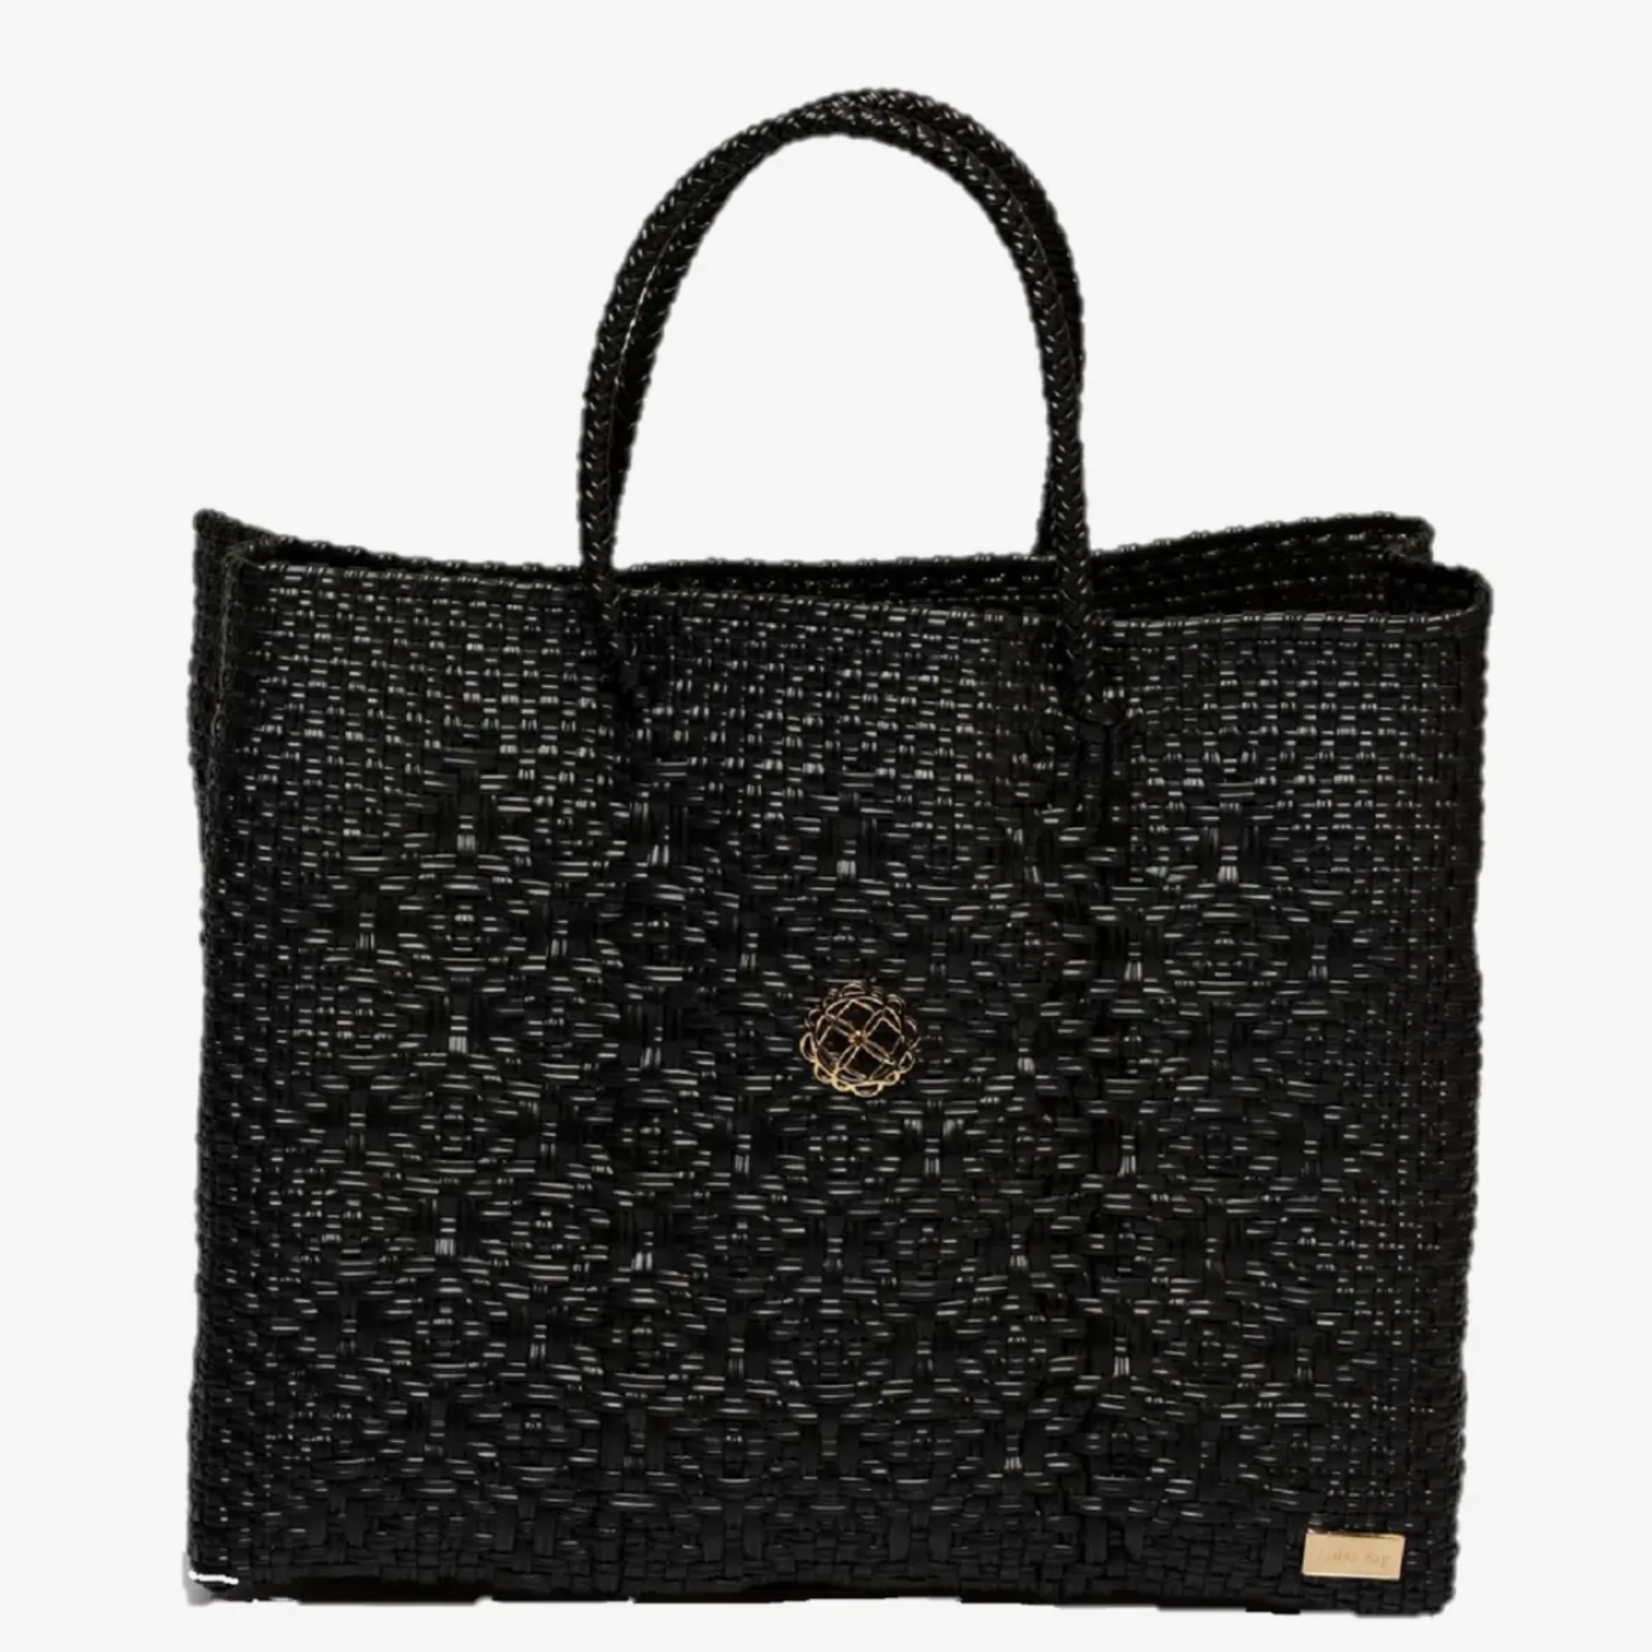 Lola's Bag Small Black Tote Bag